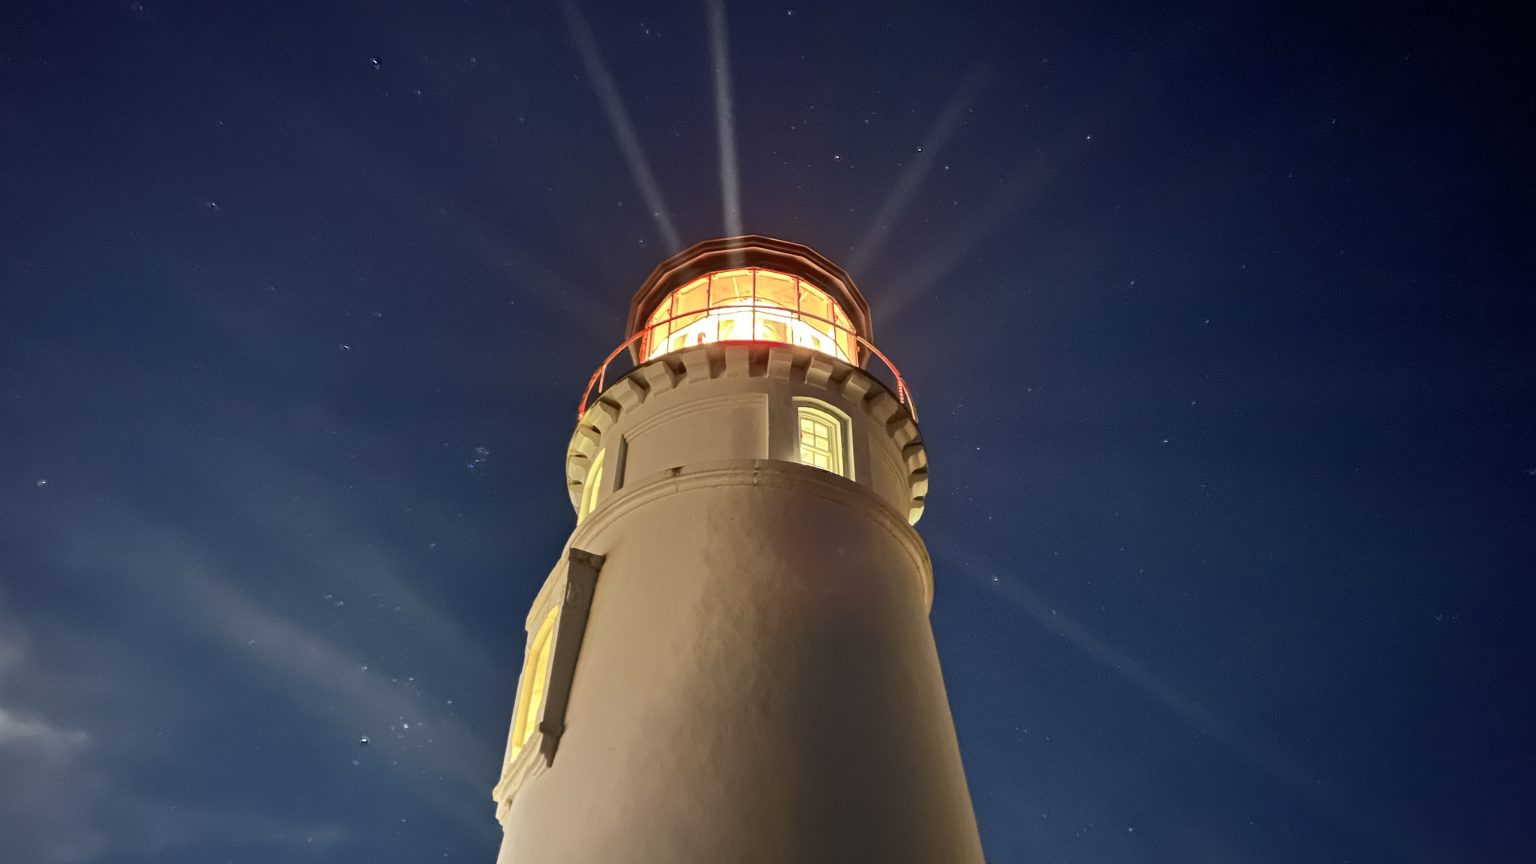 Umpqua Lighthouse at night, Oregon, United States. Photo contributed by Jennifer Bourn to the WordPress Photo Directory.